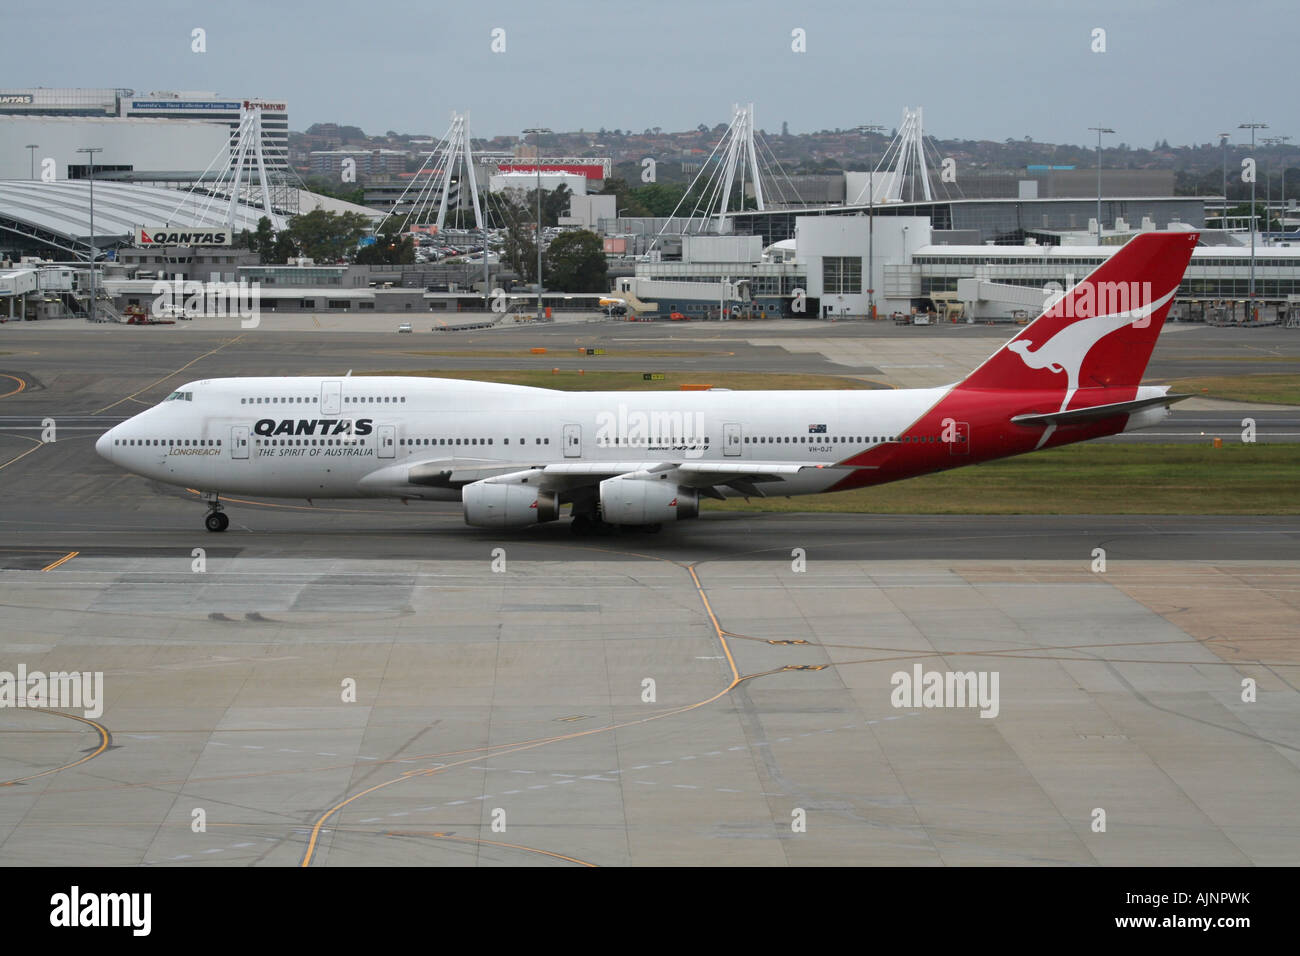 Qantas Boeing 747-400 jumbo jet taxiing at Sydney Airport, Australia. International air travel and long haul flights. Stock Photo